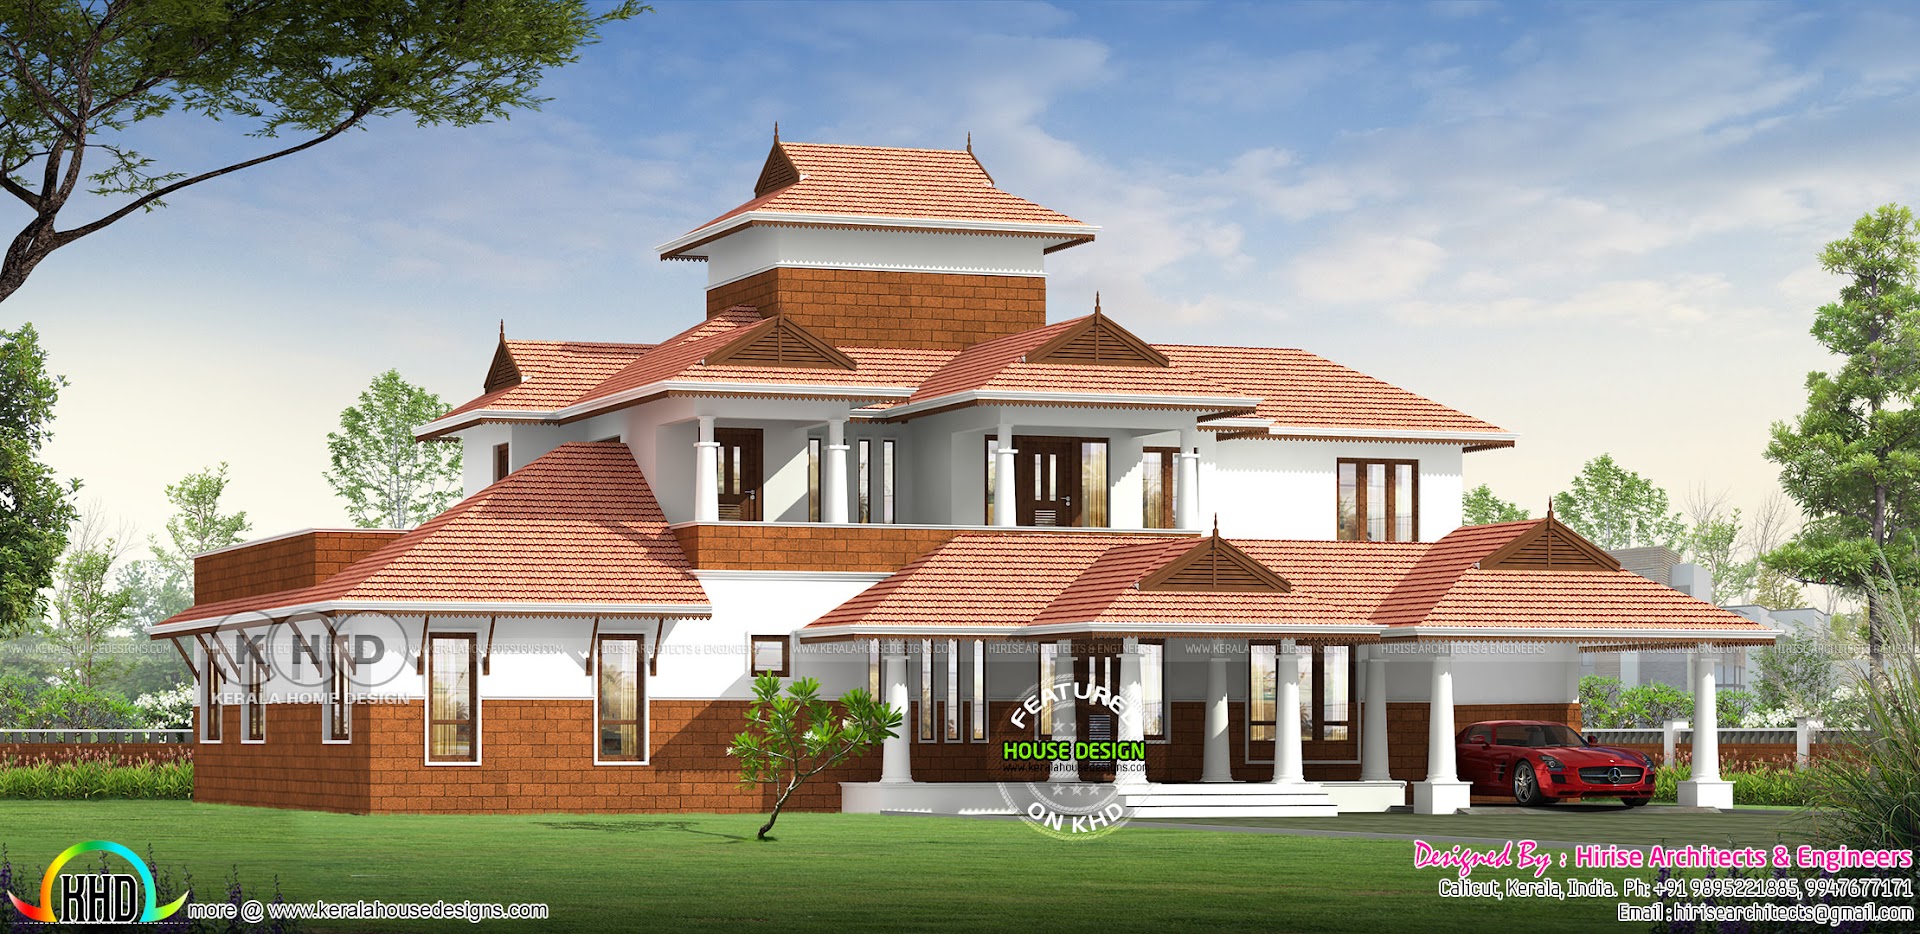 Traditional style Kerala home design 5 bedrooms - Kerala home design